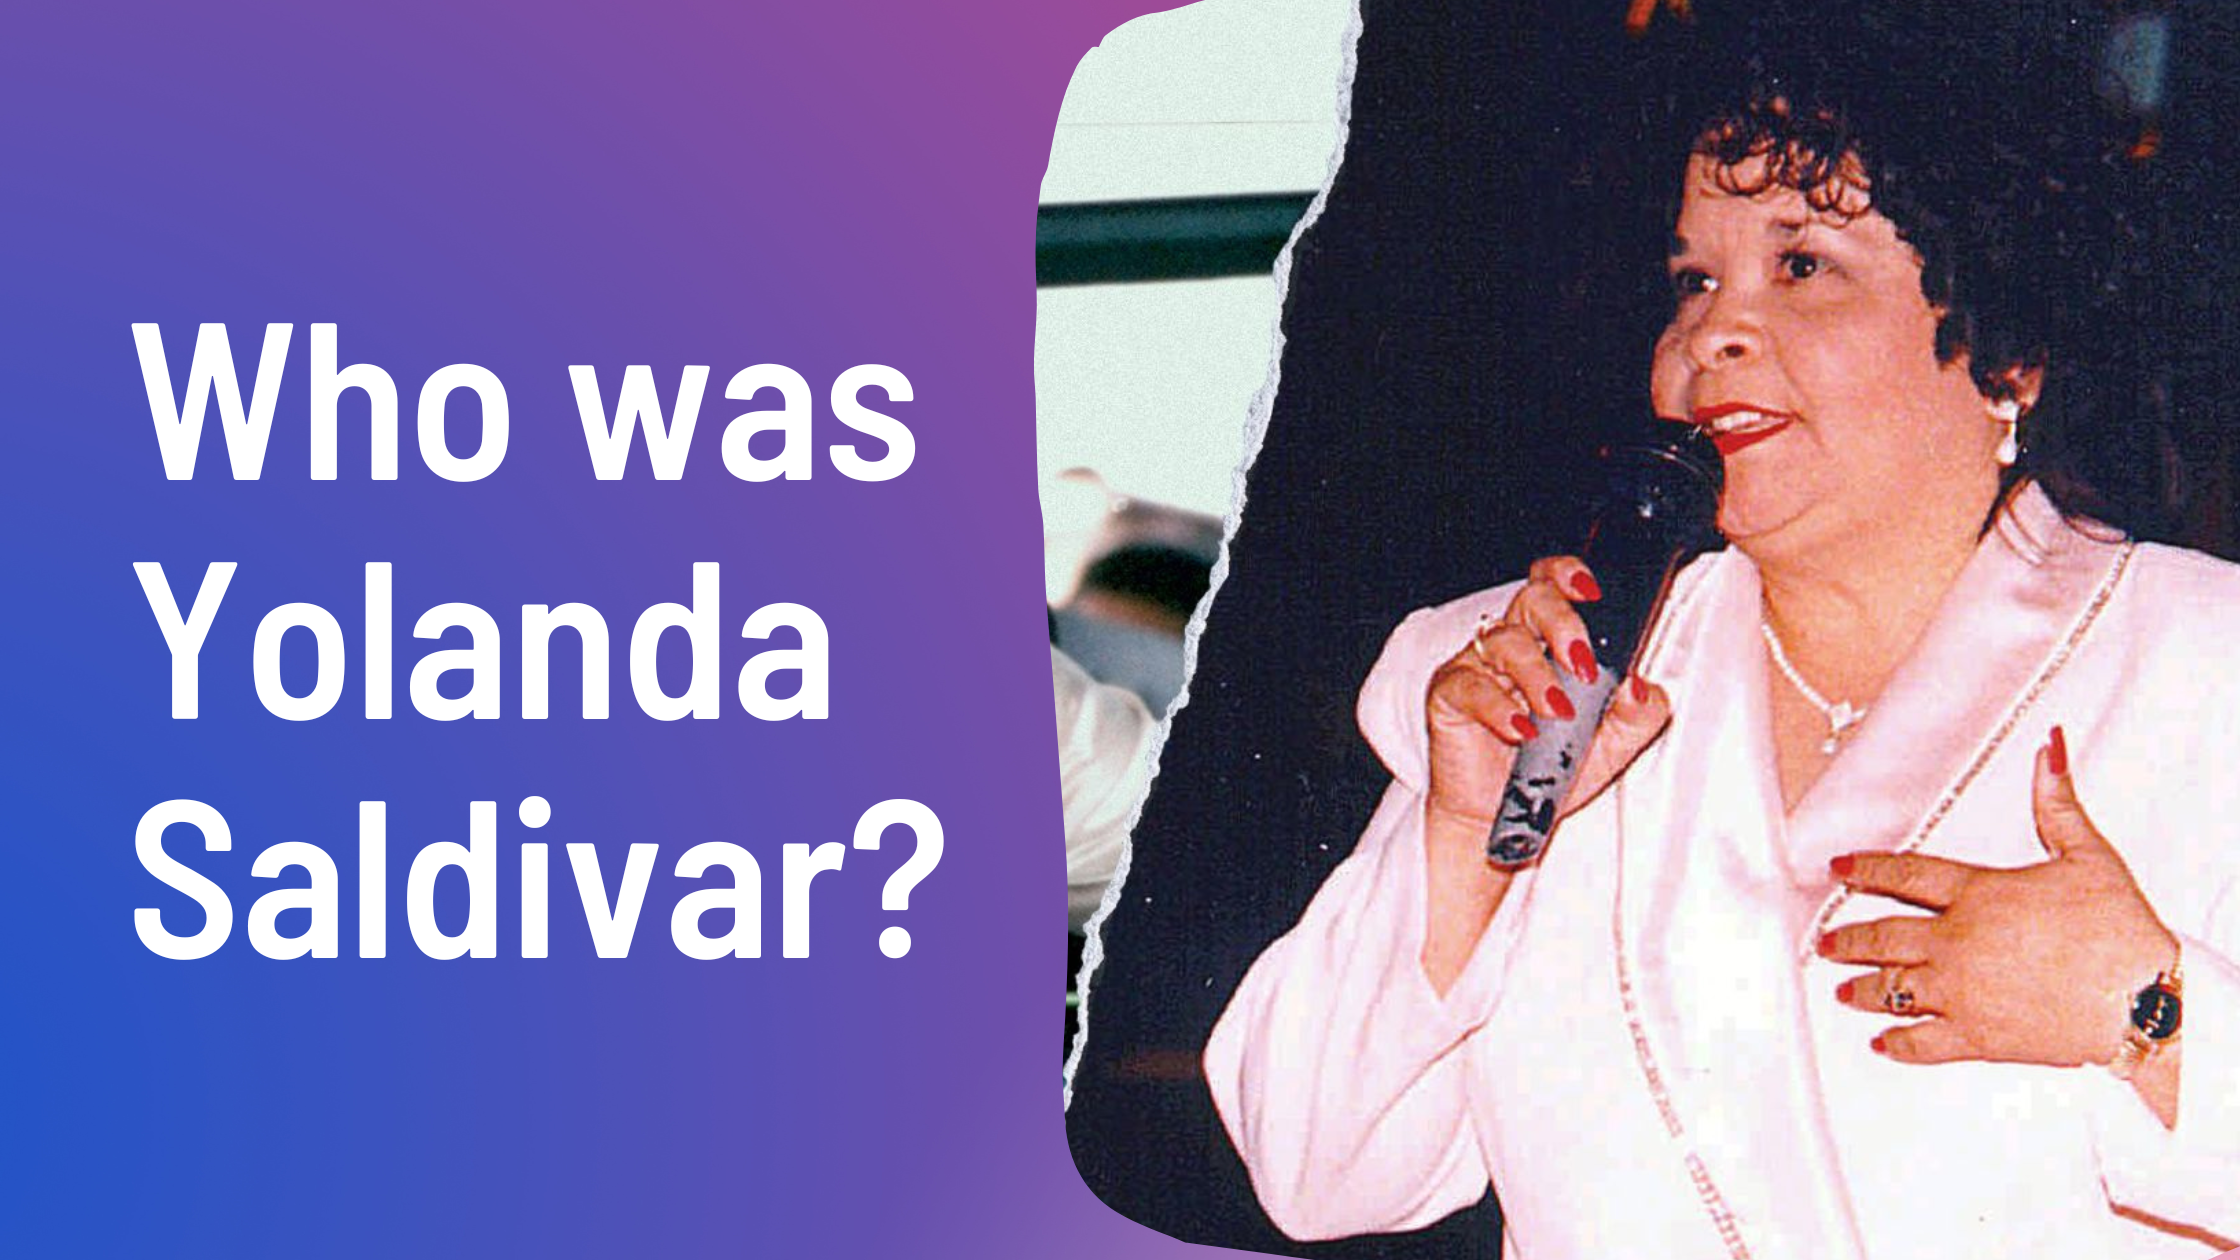 Who was Yolanda Saldivar